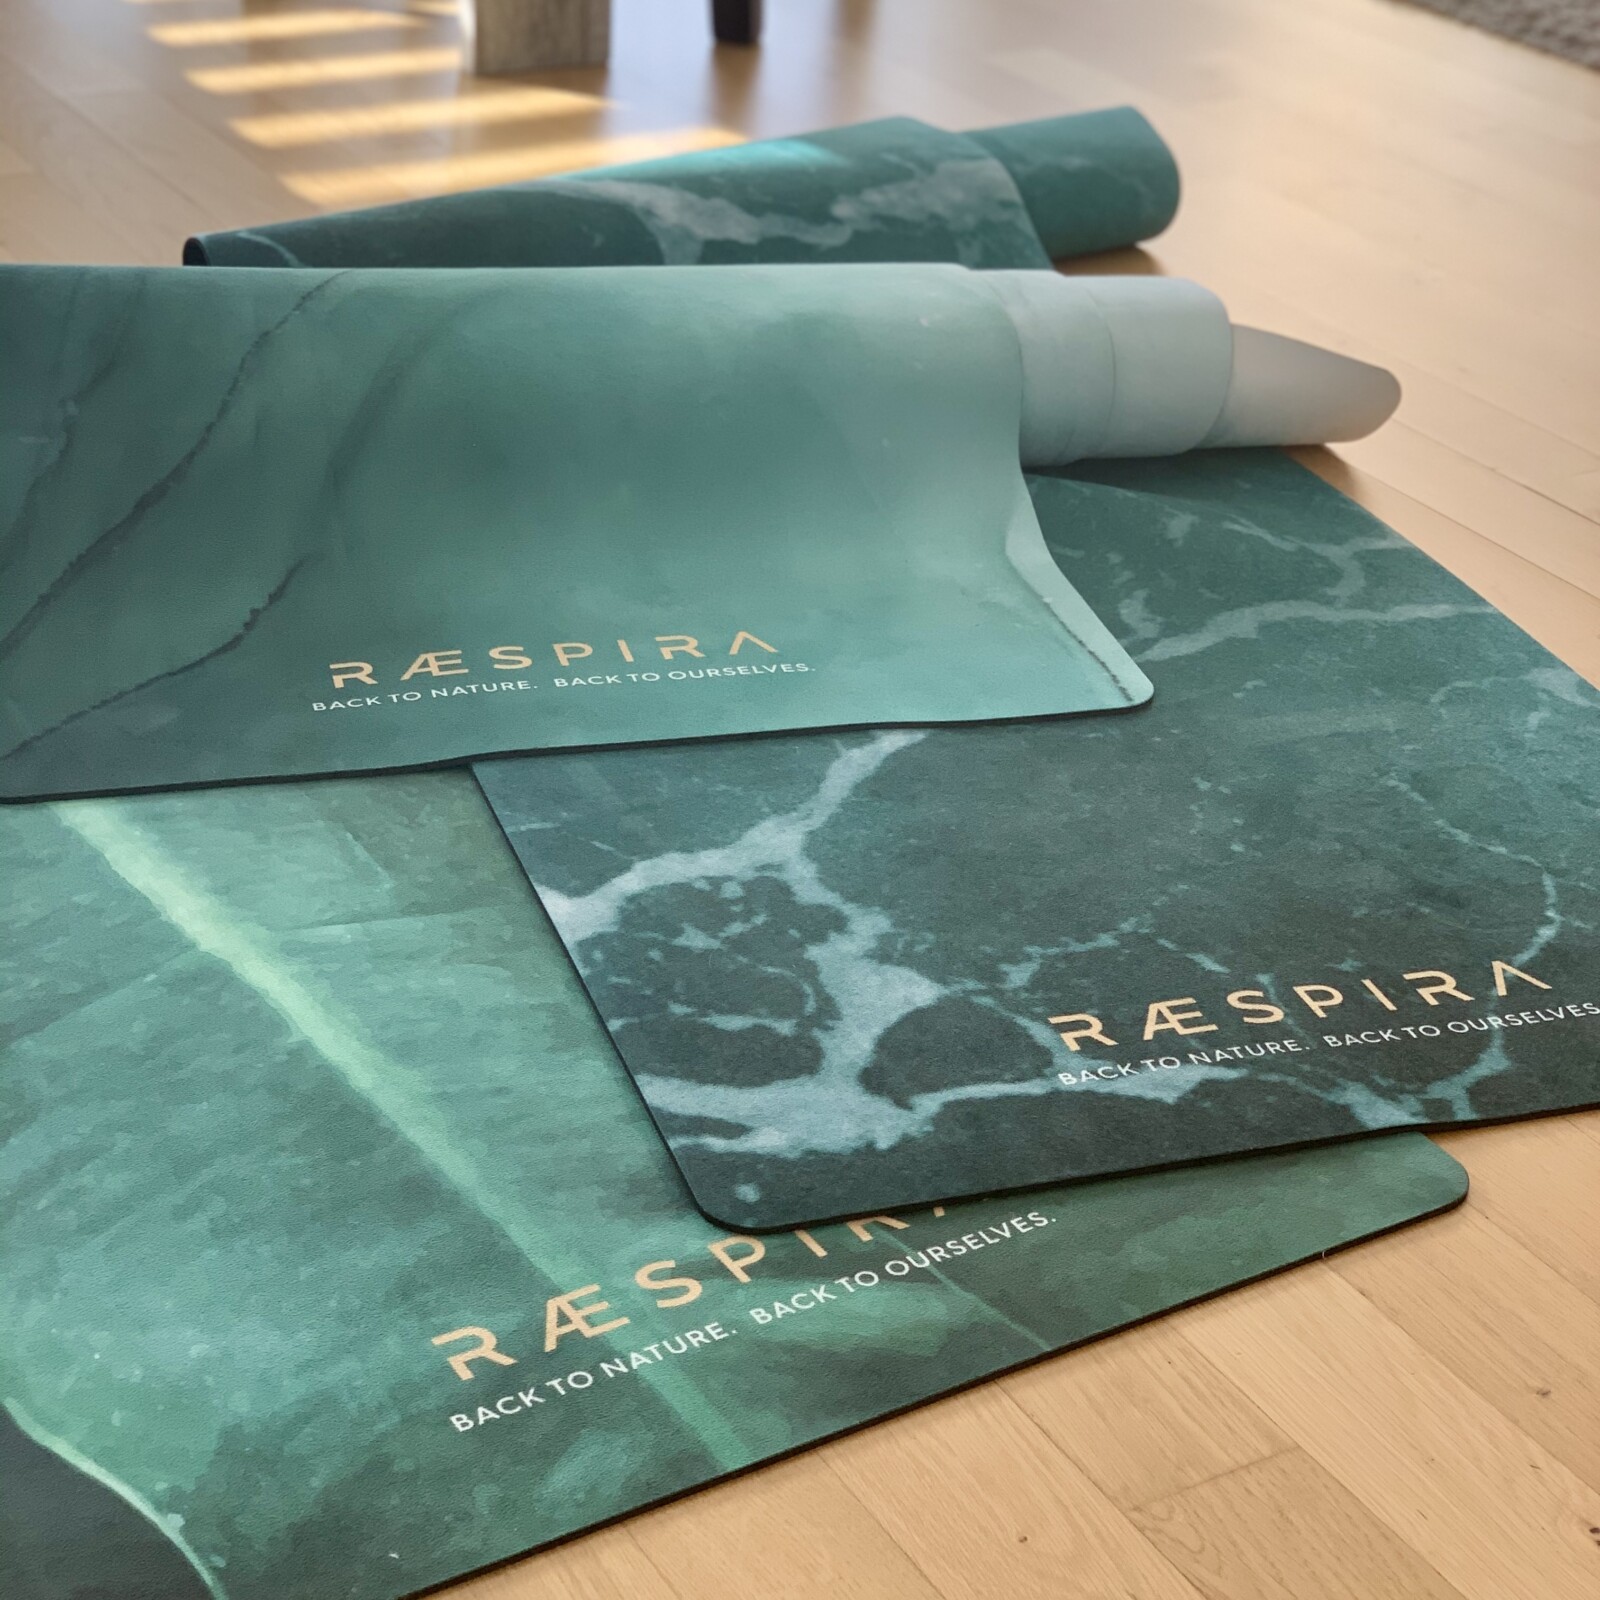 Serenity – Raespira Premium Yoga Mat